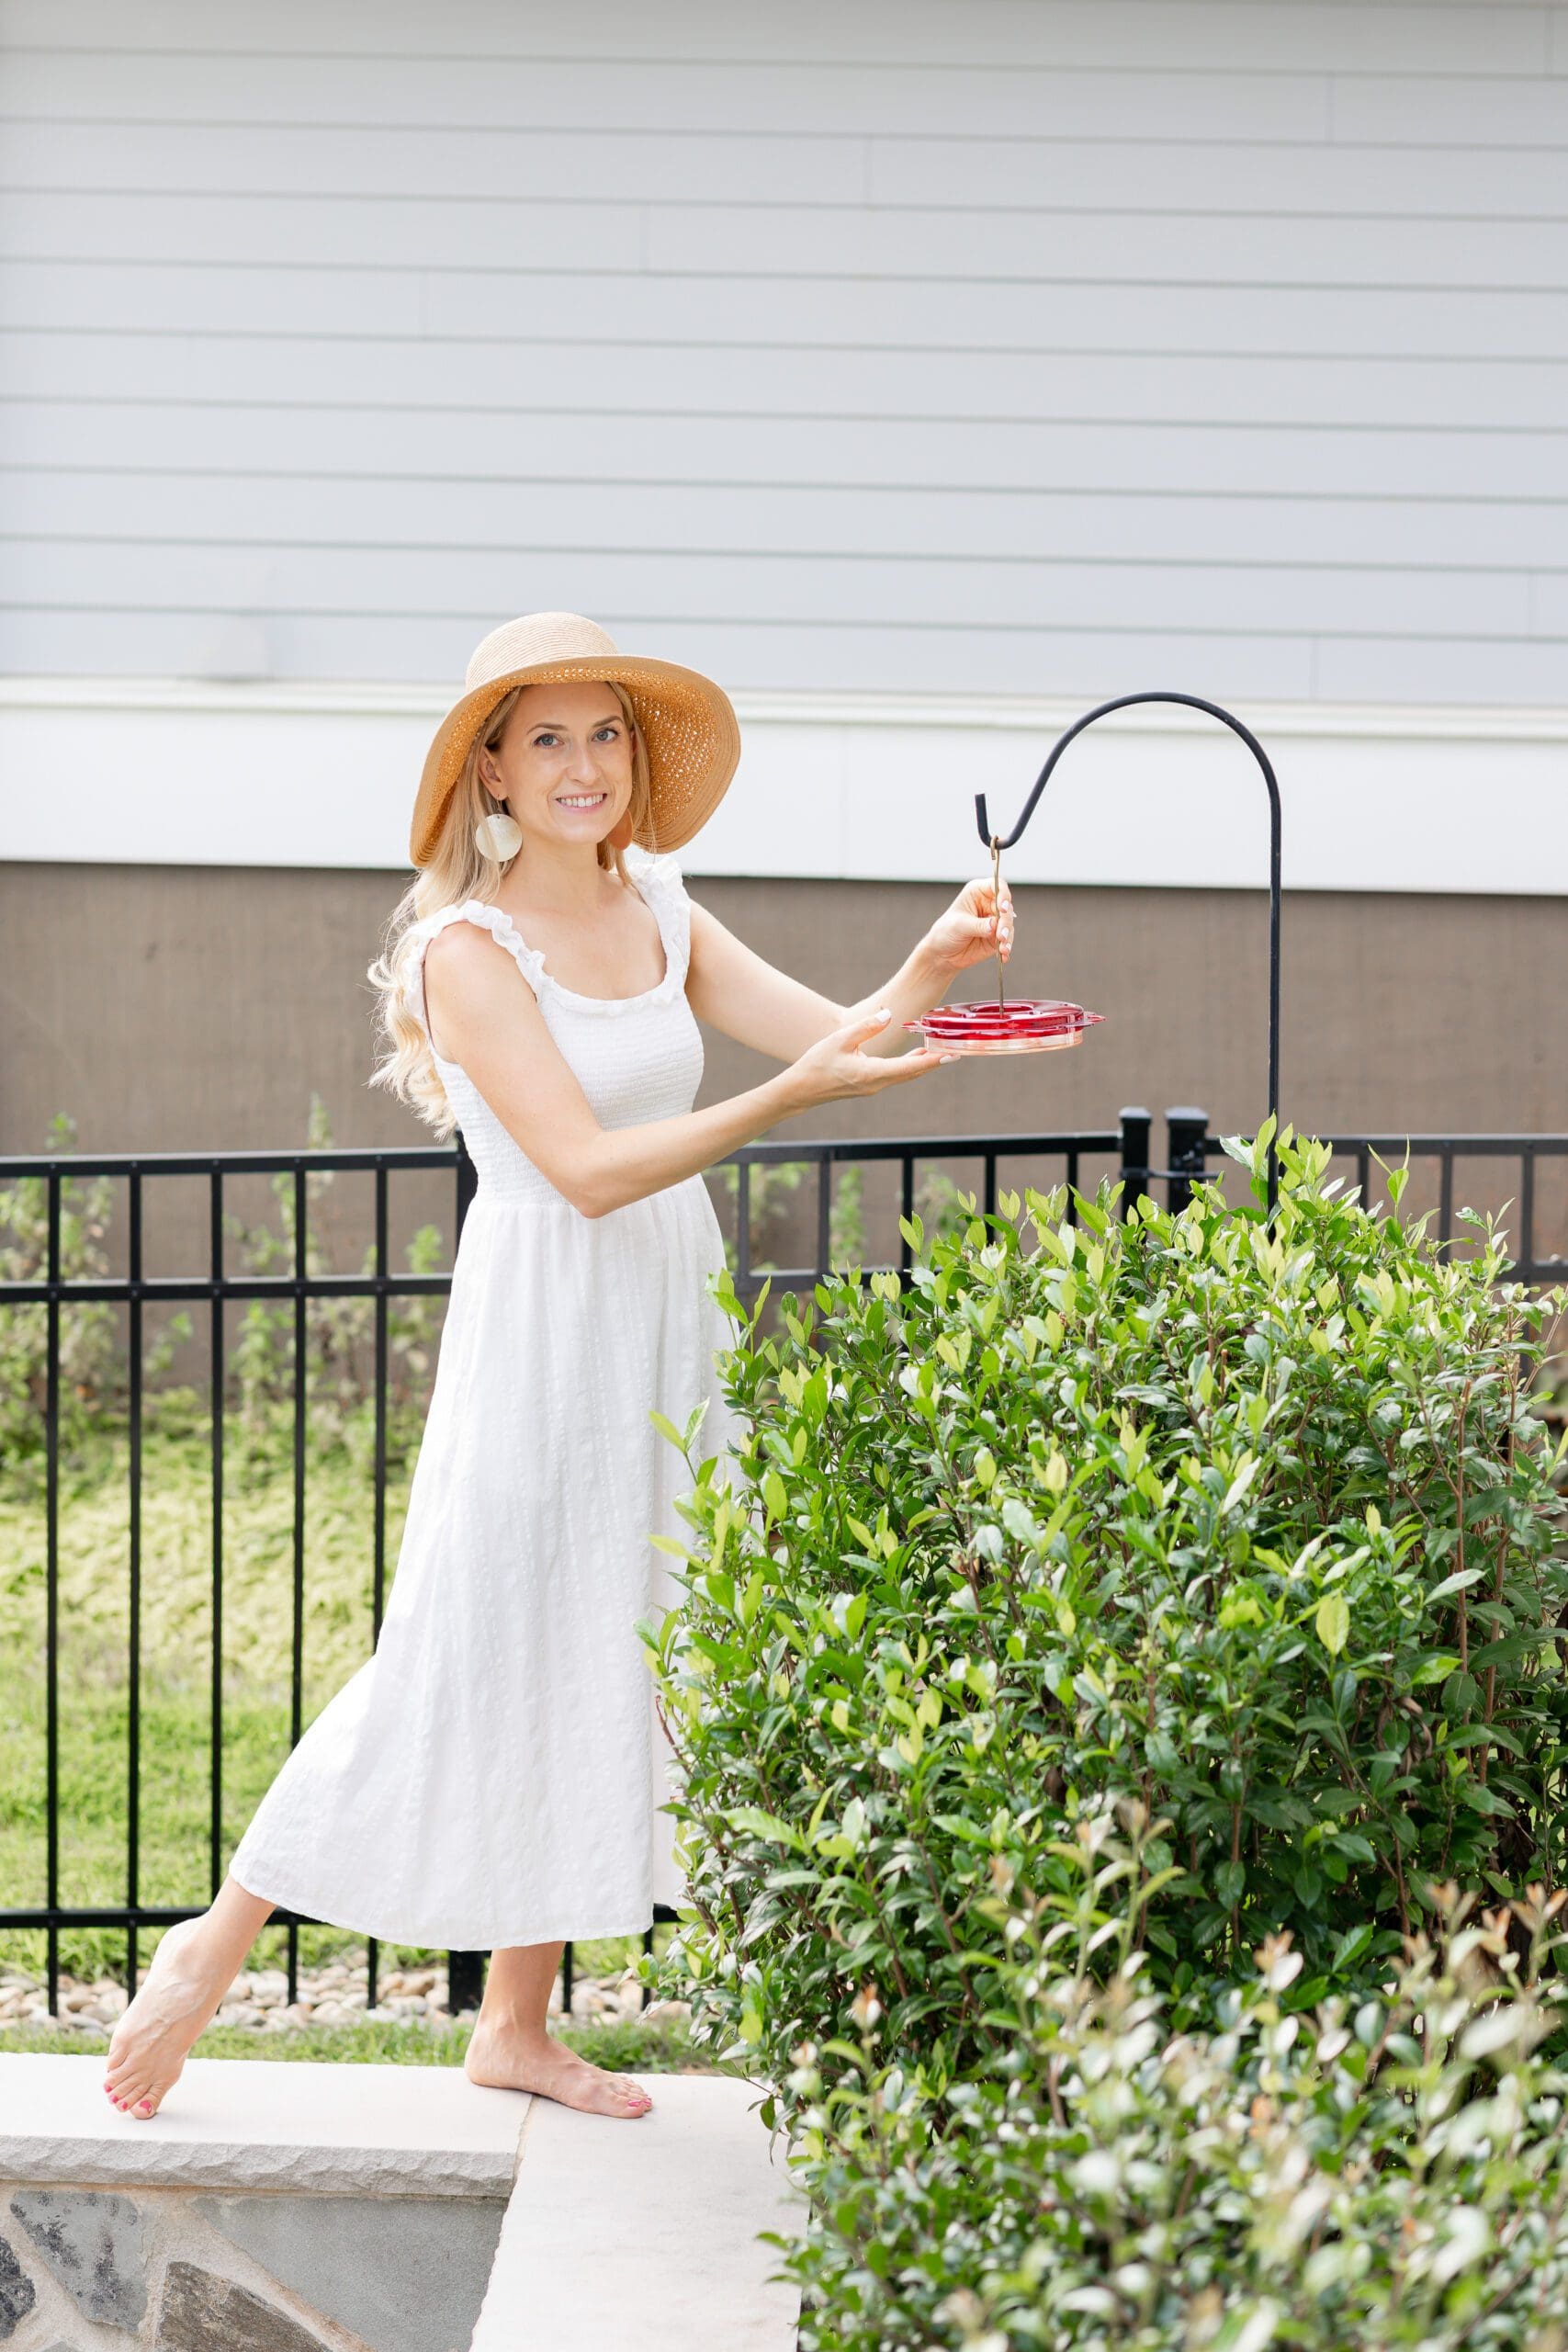 Woman in a white dress hanging a hummingbird feeder in a garden.